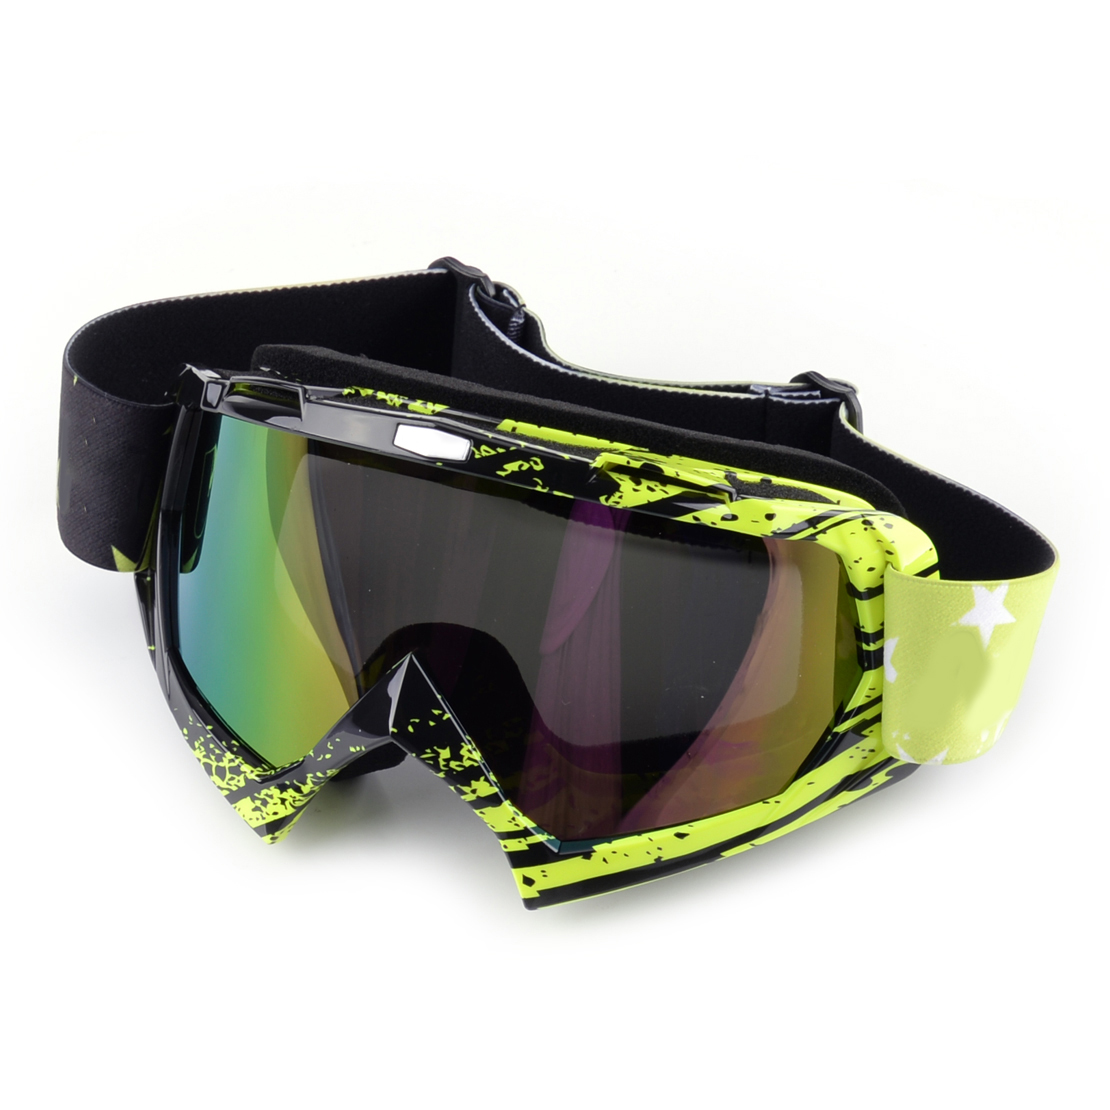 MX Racing Brille Goggle Motocross Enduro Quad Cross MTB Offroad BMX UV-Schutz